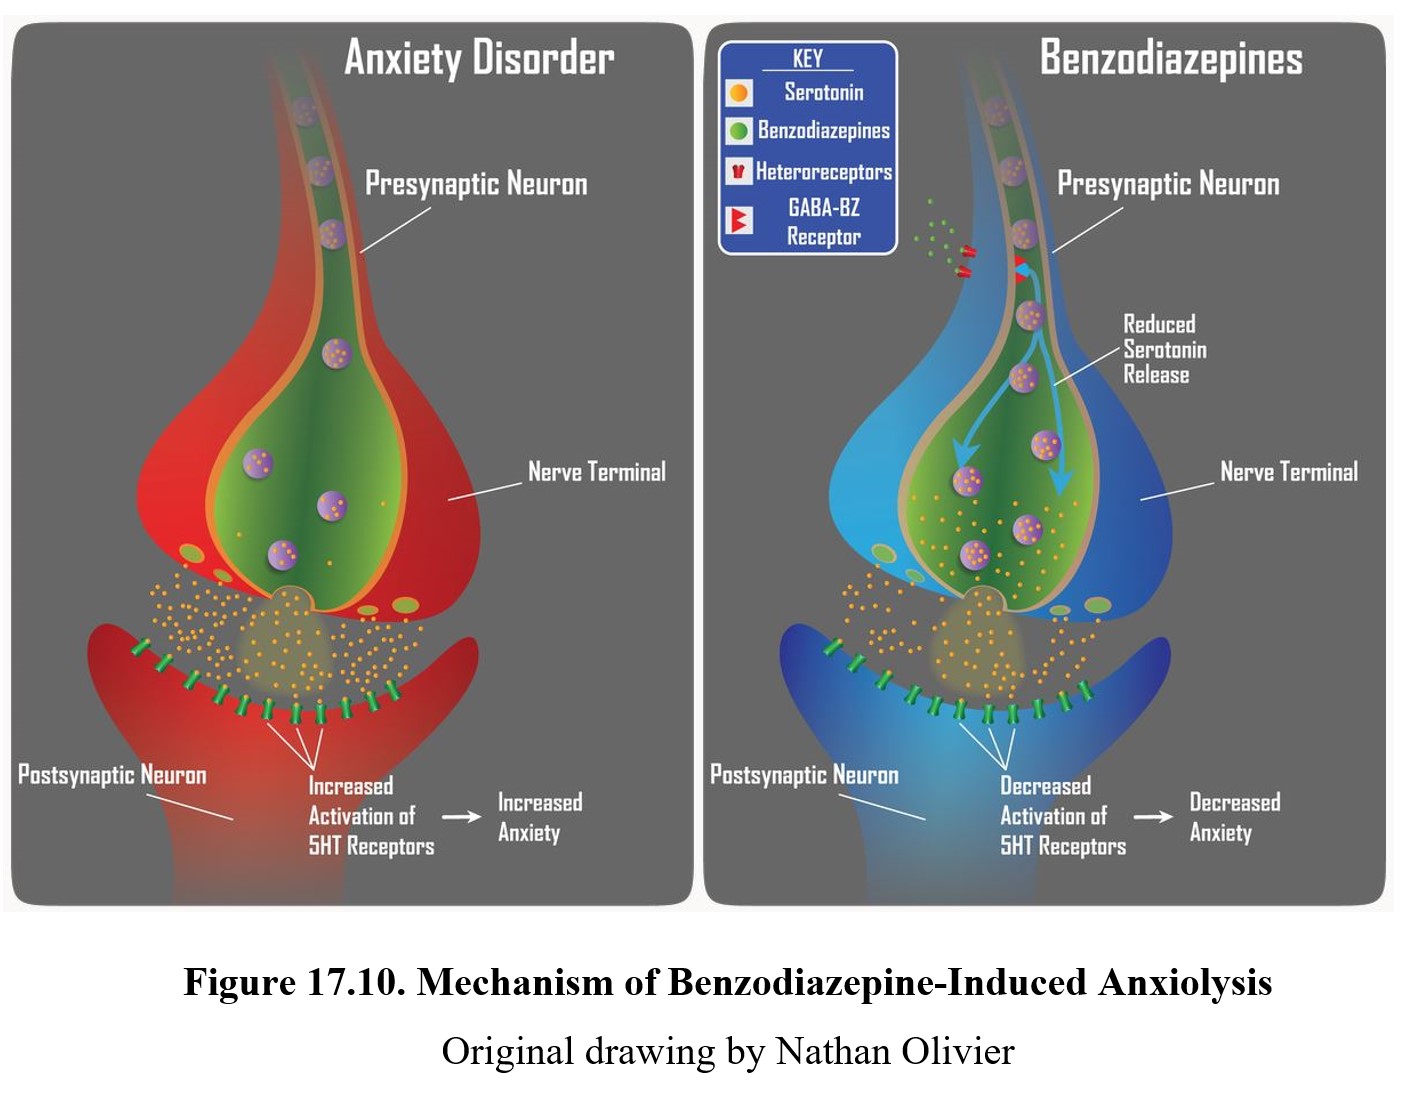 How Do Benzodiazepines Reduce Anxiety?